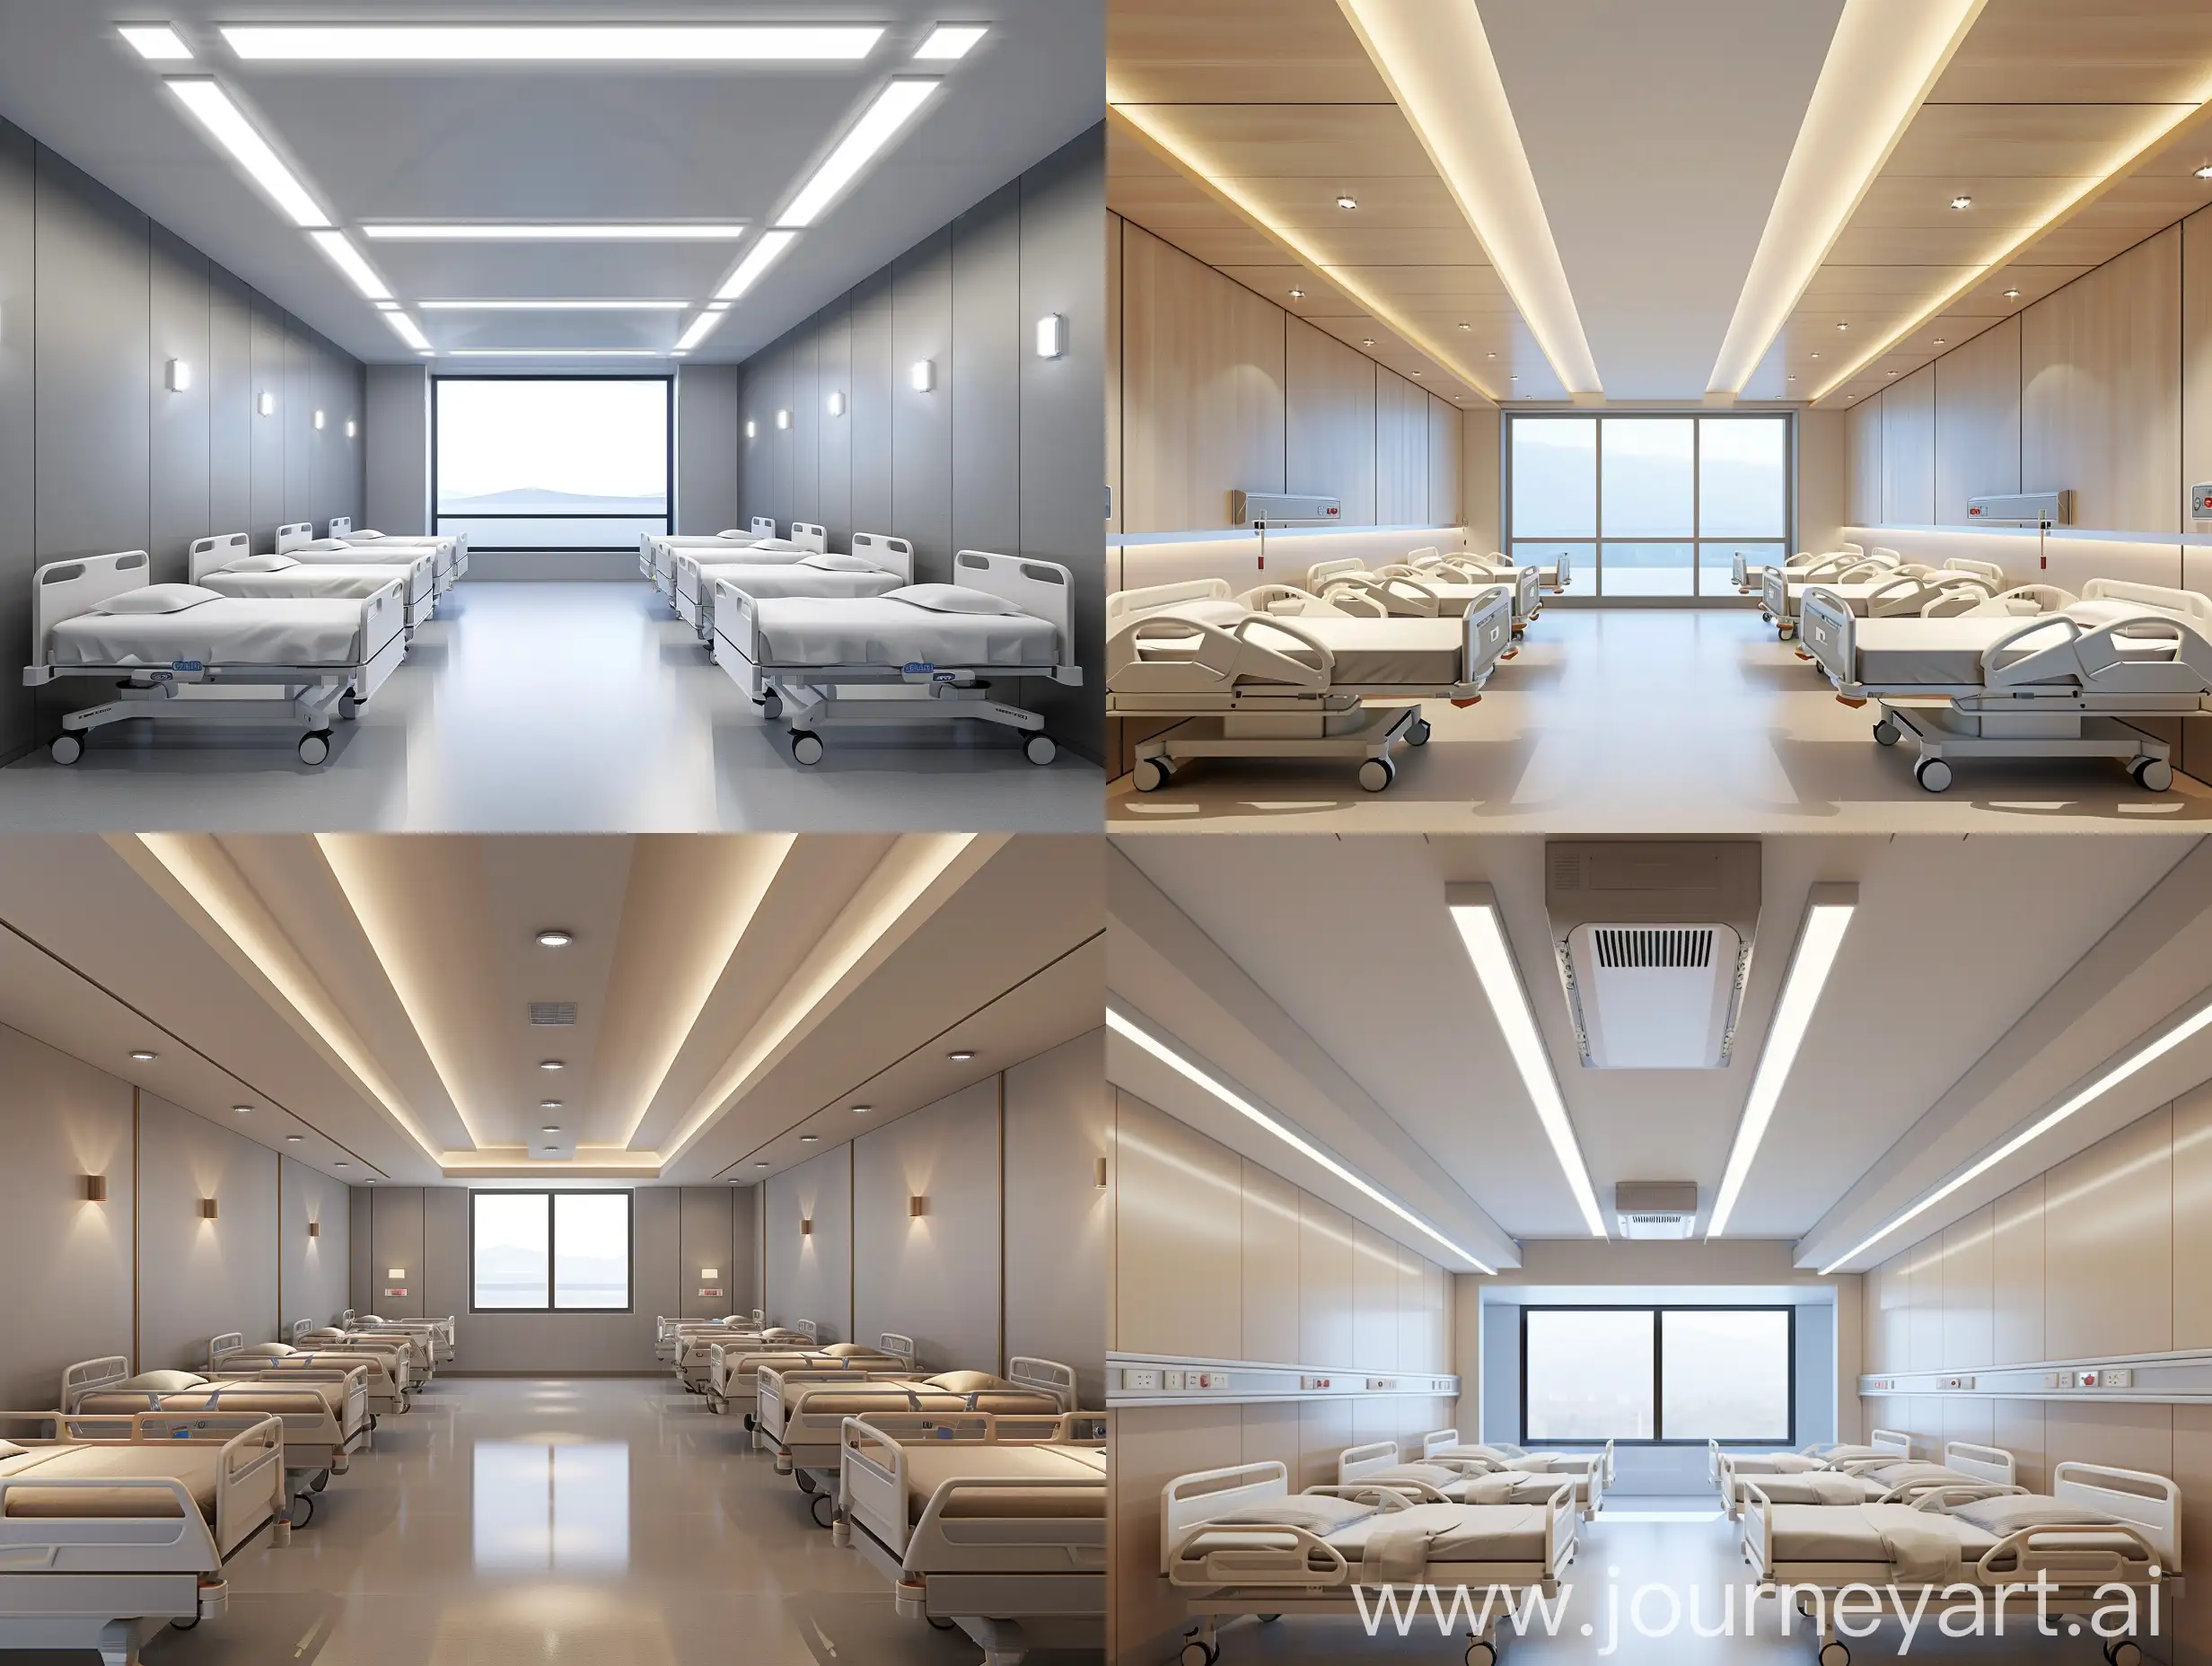 Spacious-Modern-Hospital-Maternity-Ward-with-LED-Lighting